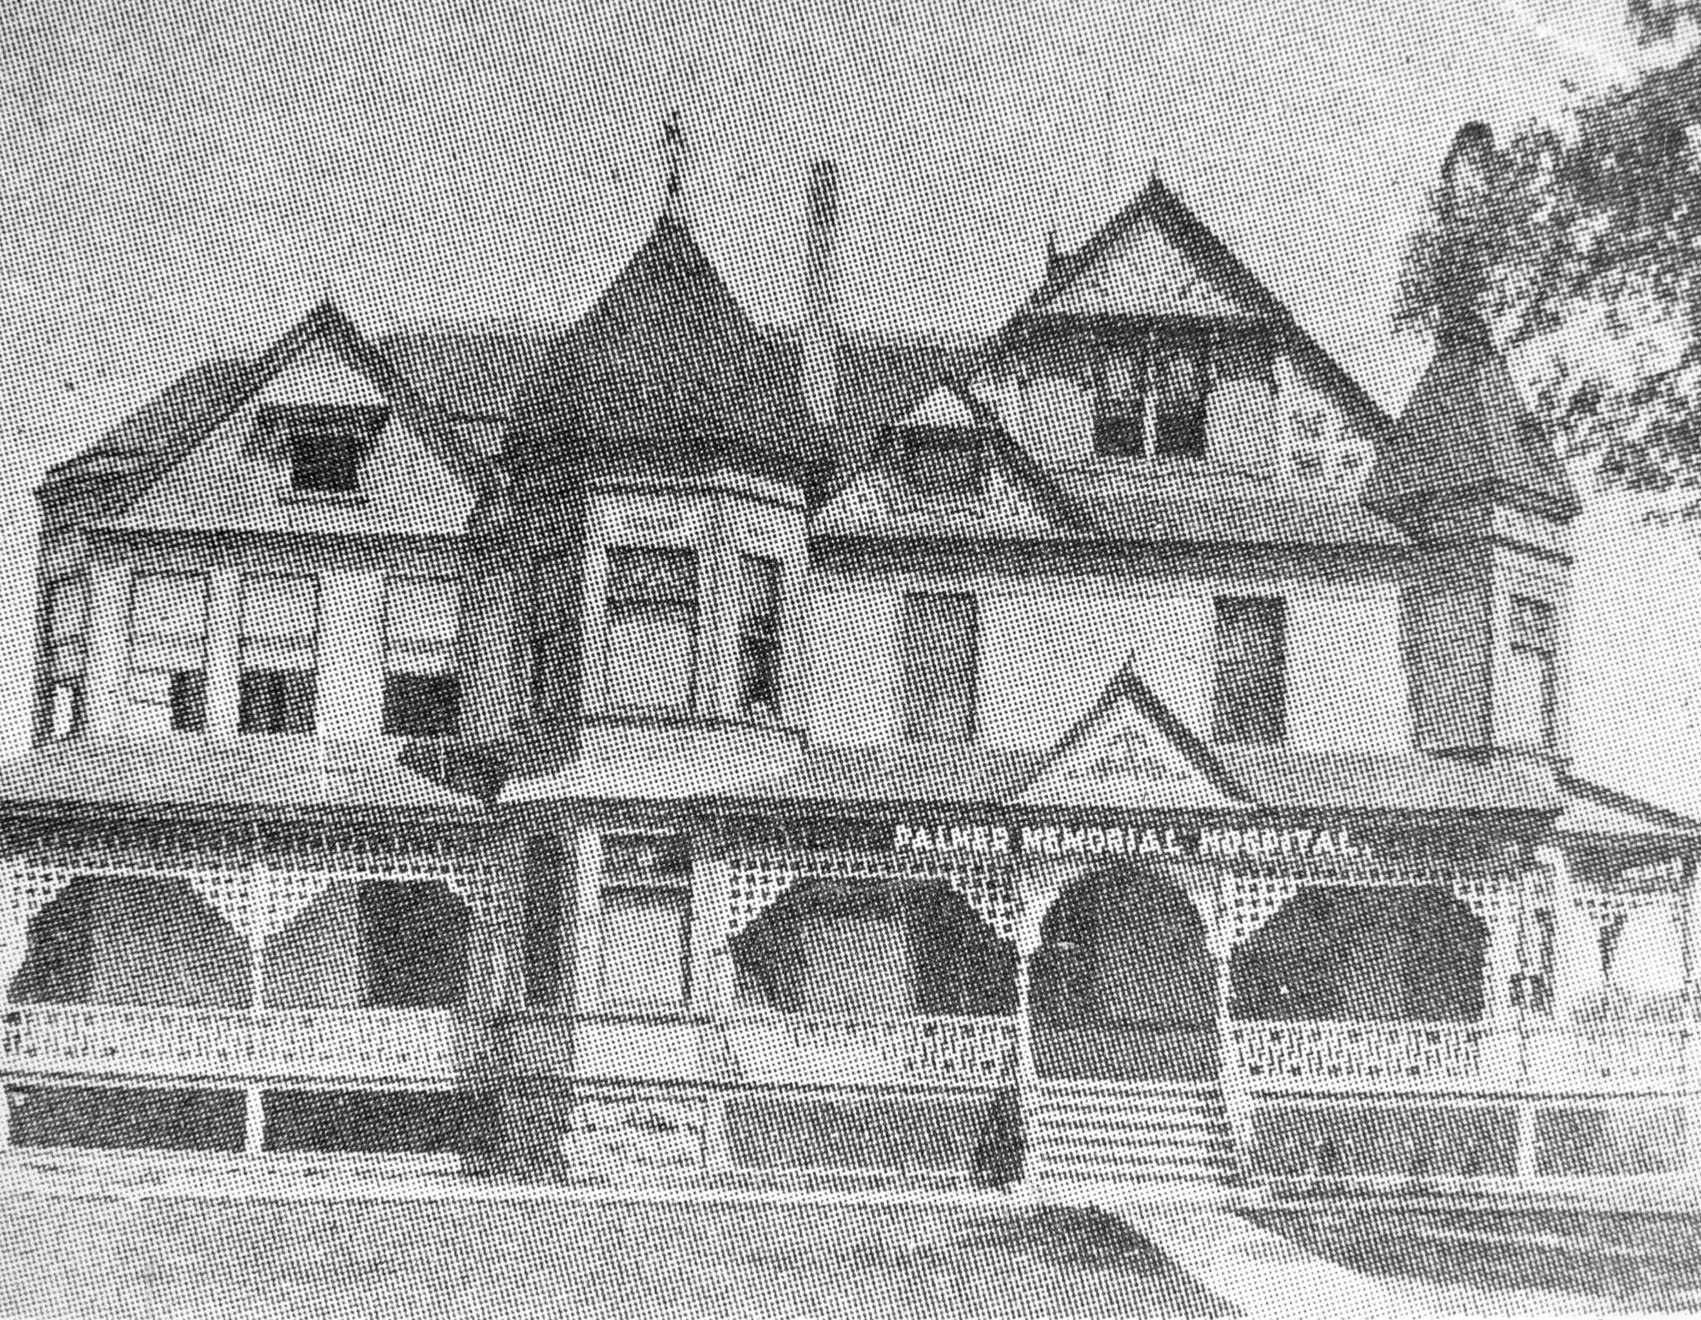 Palmer Memorial Hospital, Washington St., Janesville, 1895